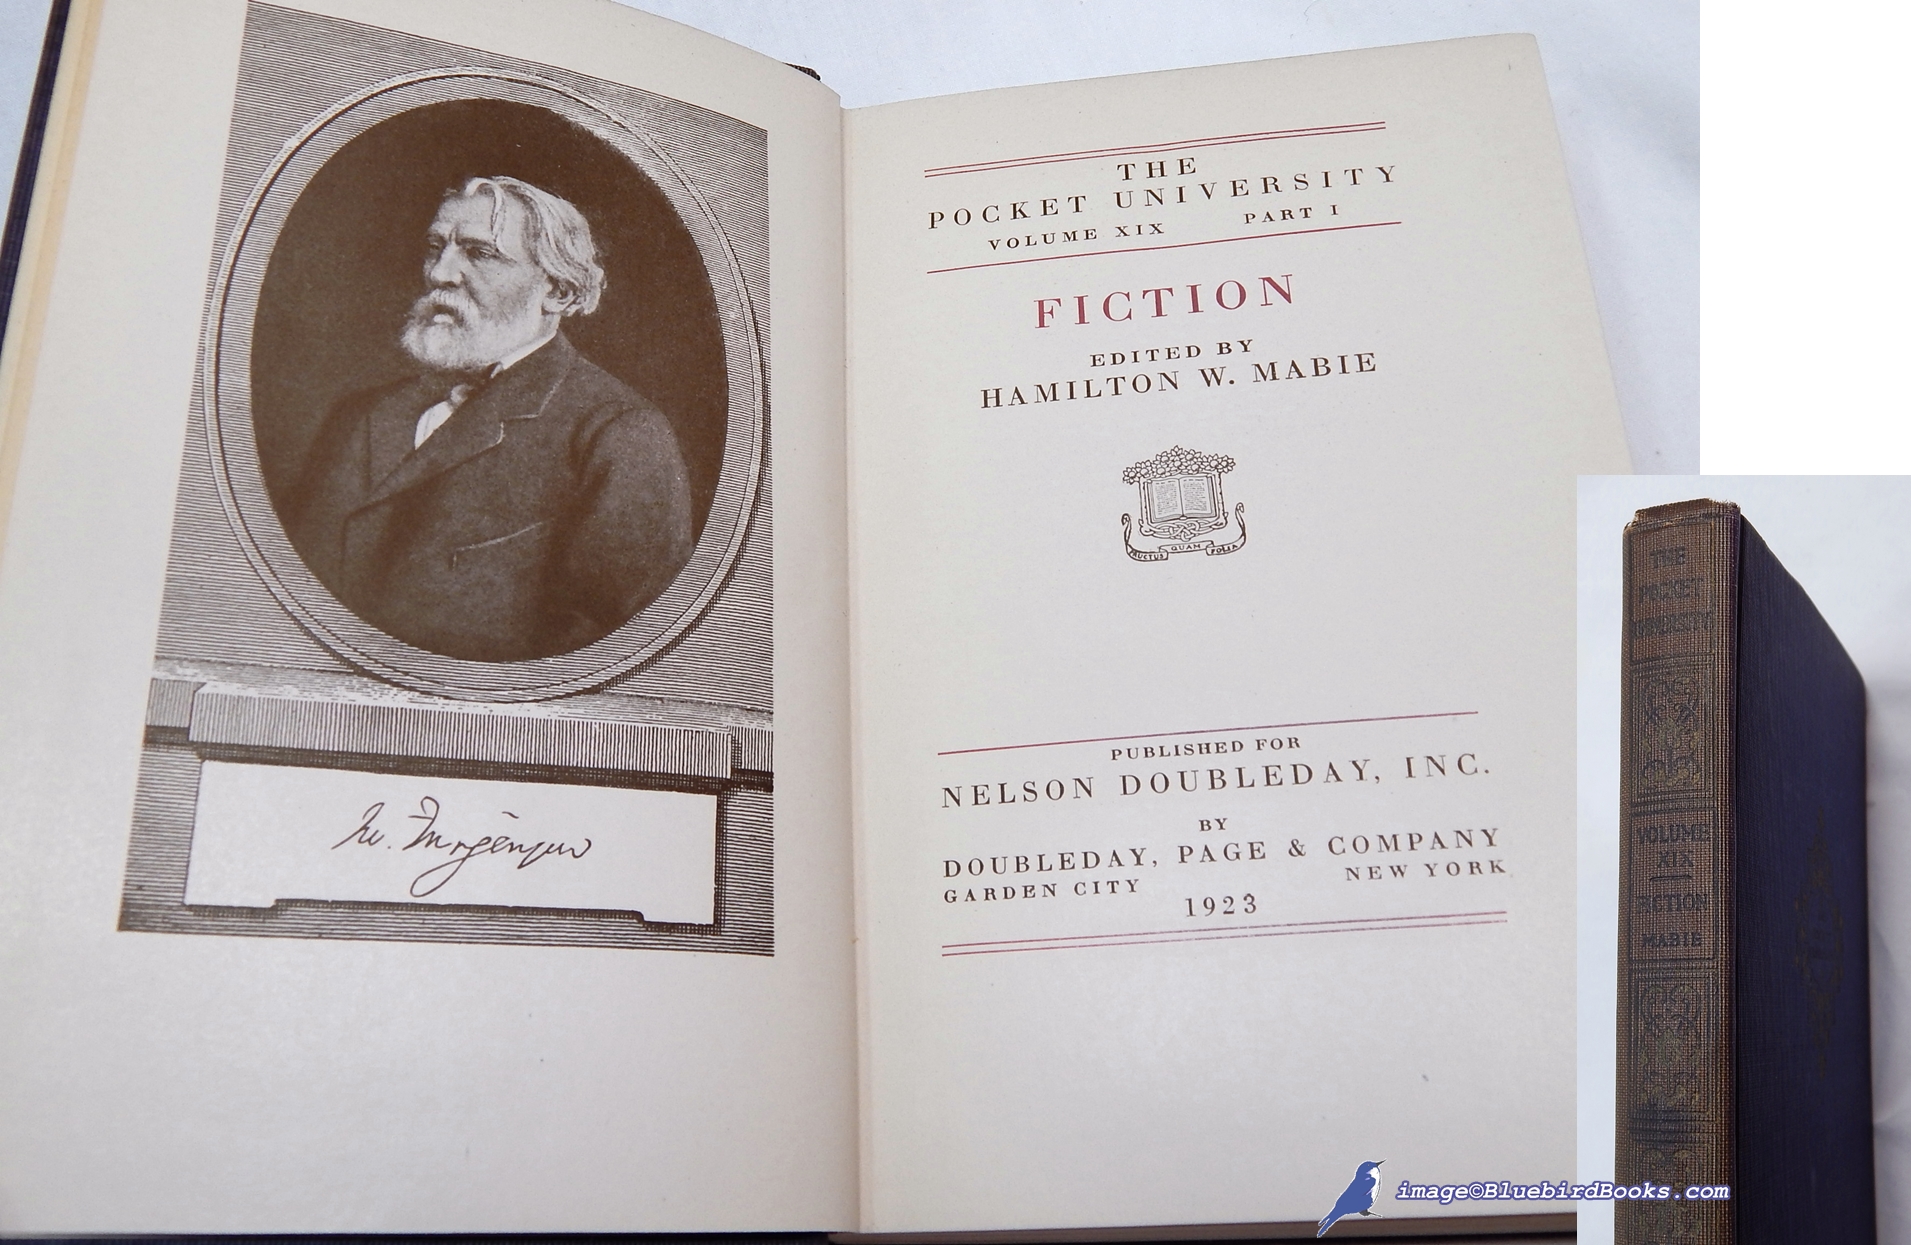 MABIE, HAMILTON W. (EDITOR) - The Pocket University Volume XIX: Parts I & II: Fiction